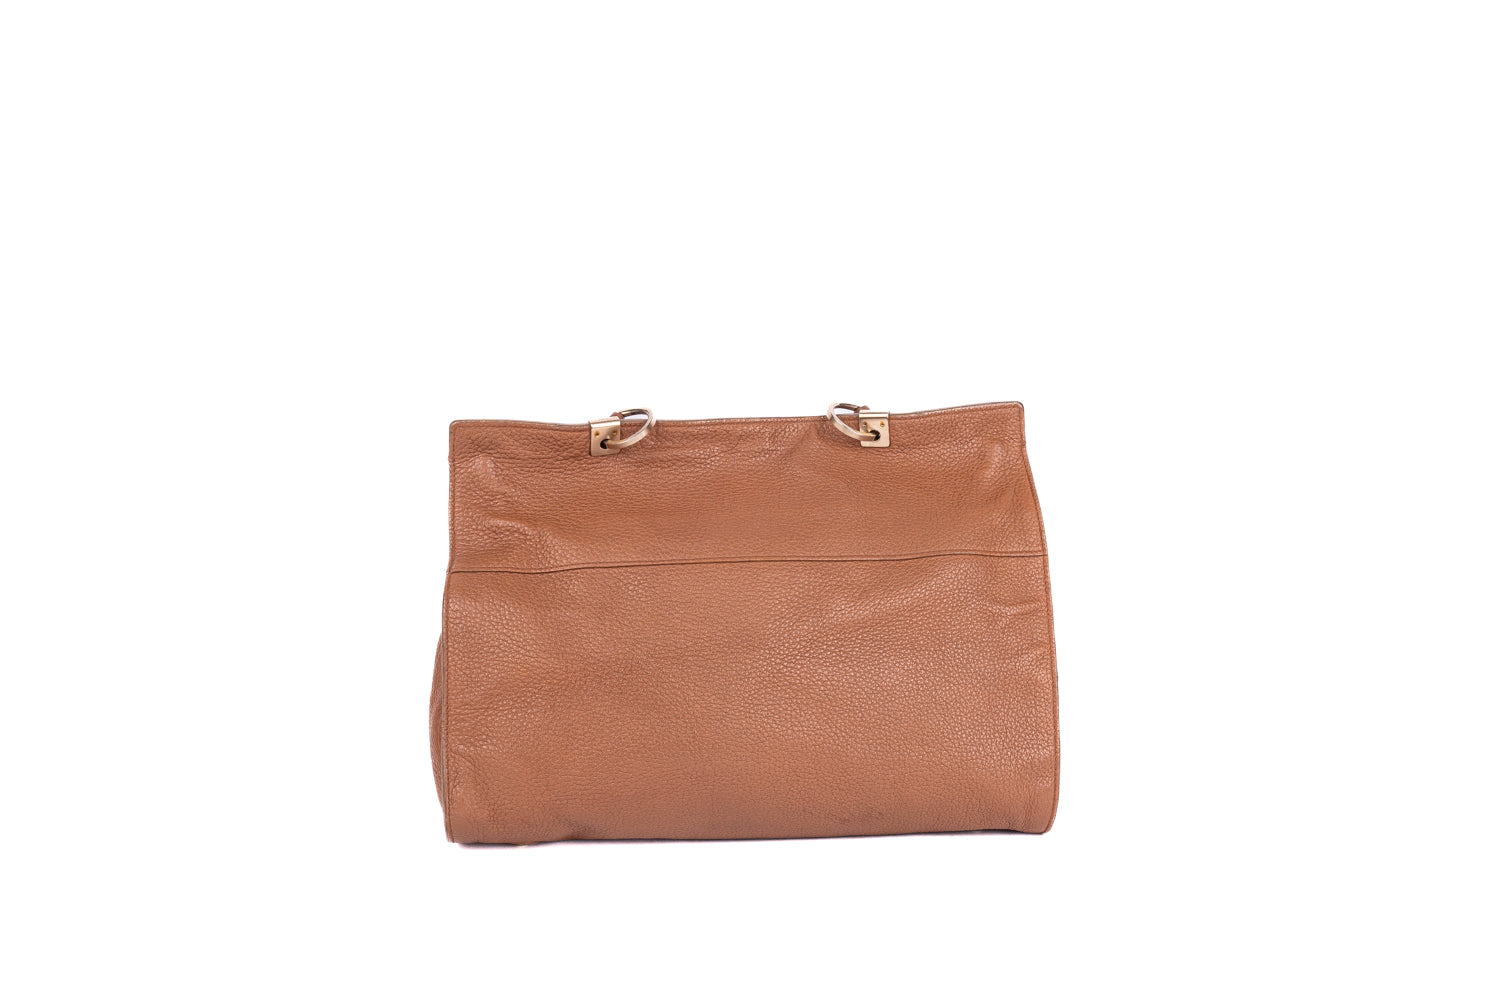 Brown Leather Top Handle Satchel Bag